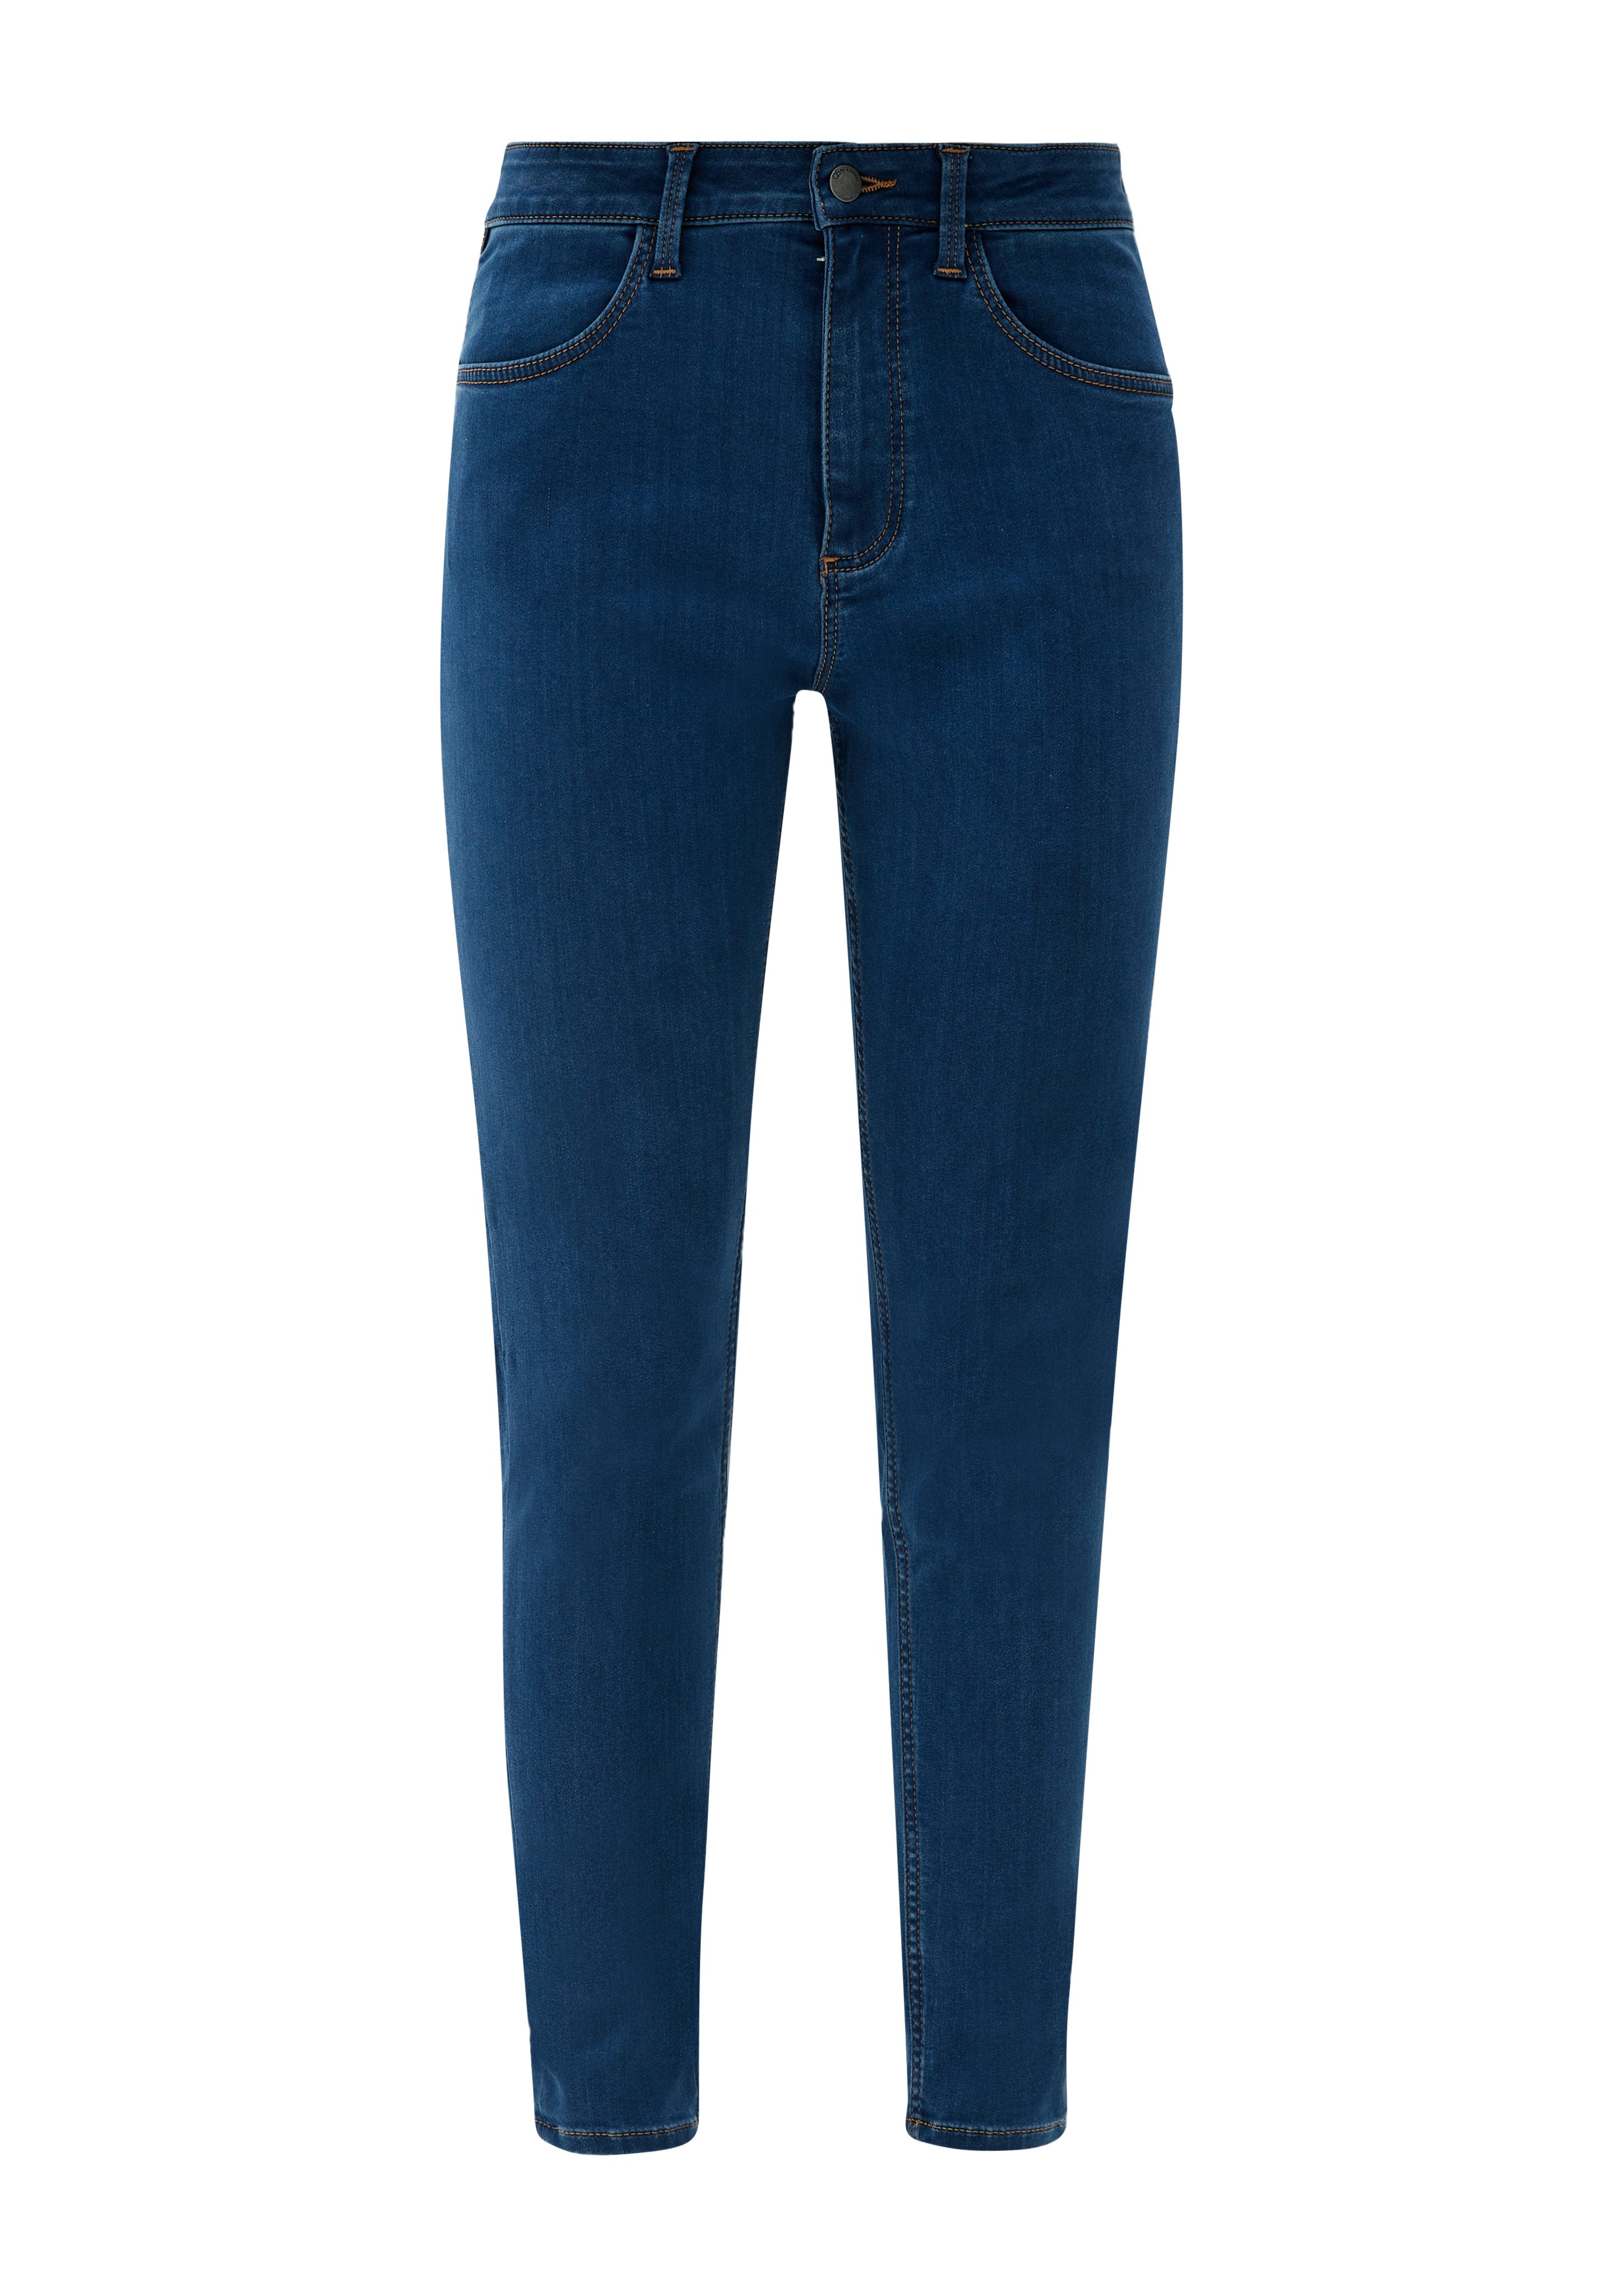 Leg Skinny Skinny Ankle-Jeans / 7/8-Hose Rise High / blau / QS Sadie Fit